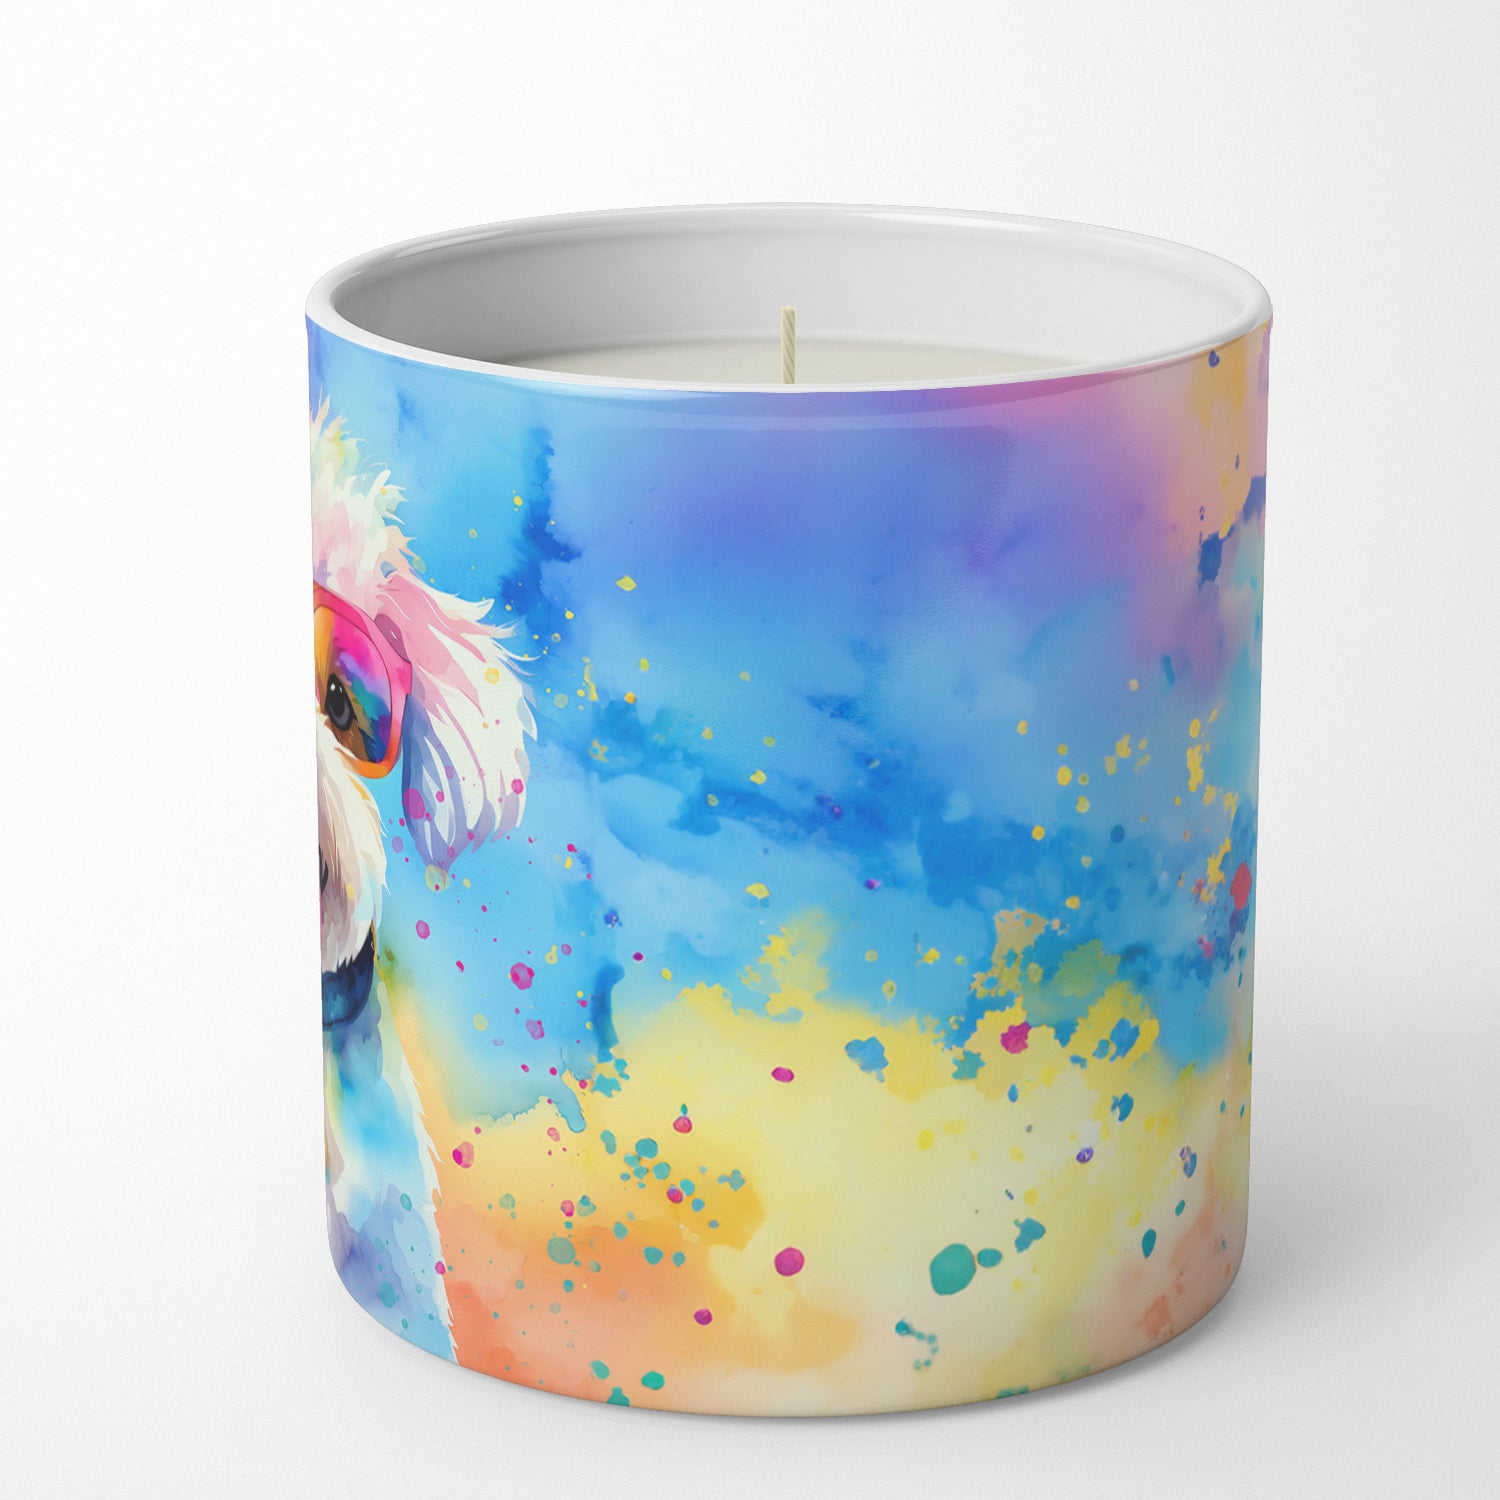 Bichon Frise Hippie Dawg Decorative Soy Candle